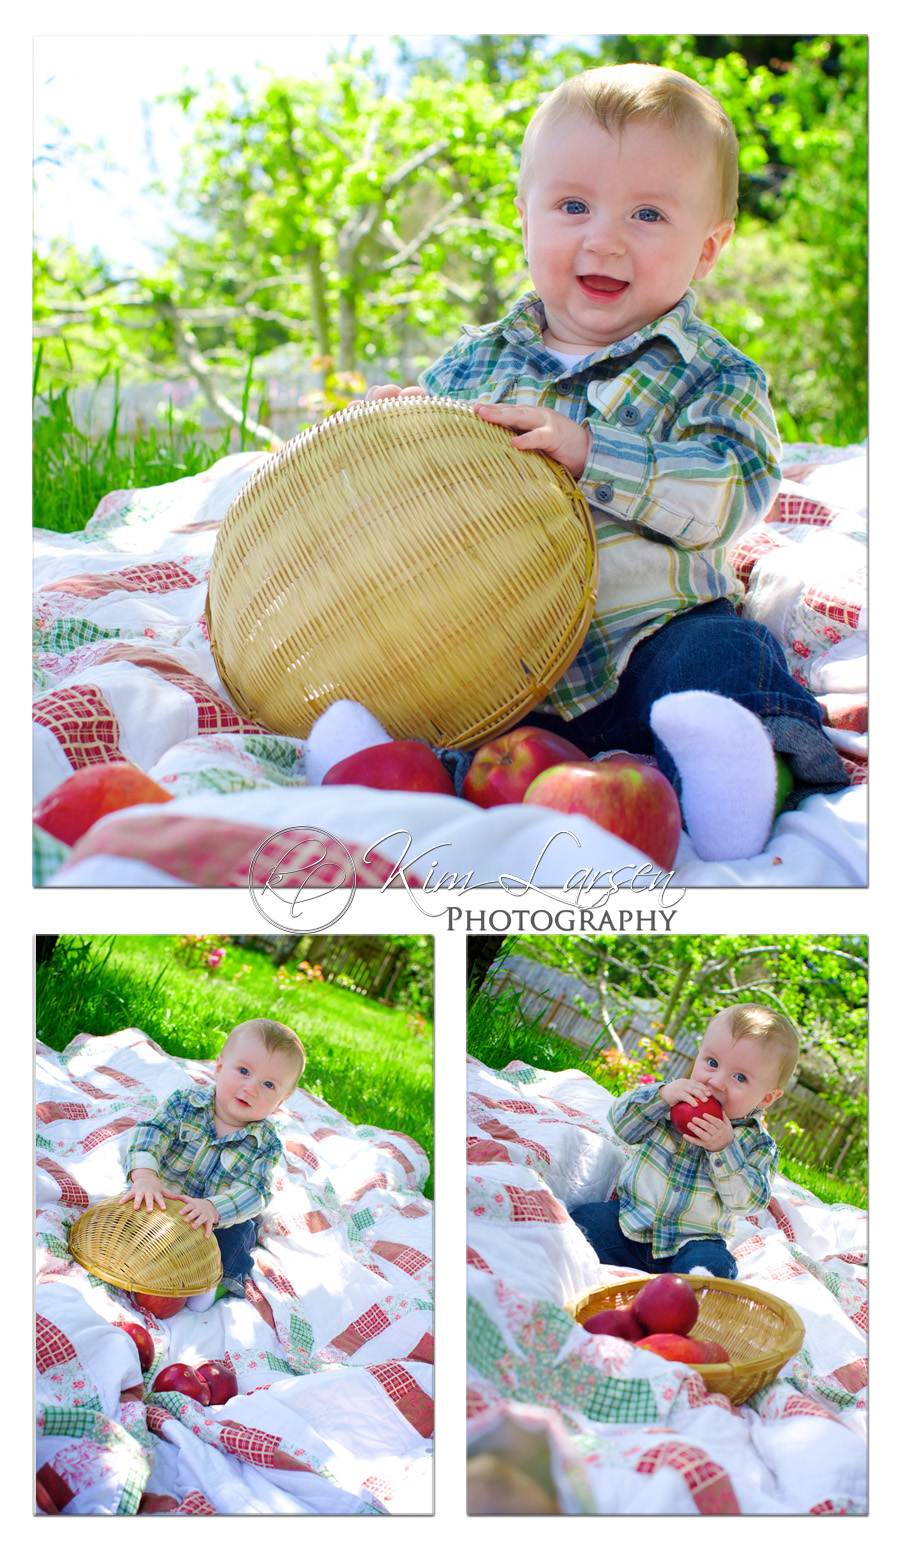 7 month outdoor baby portraits ©Kim Larsen Photography 2011